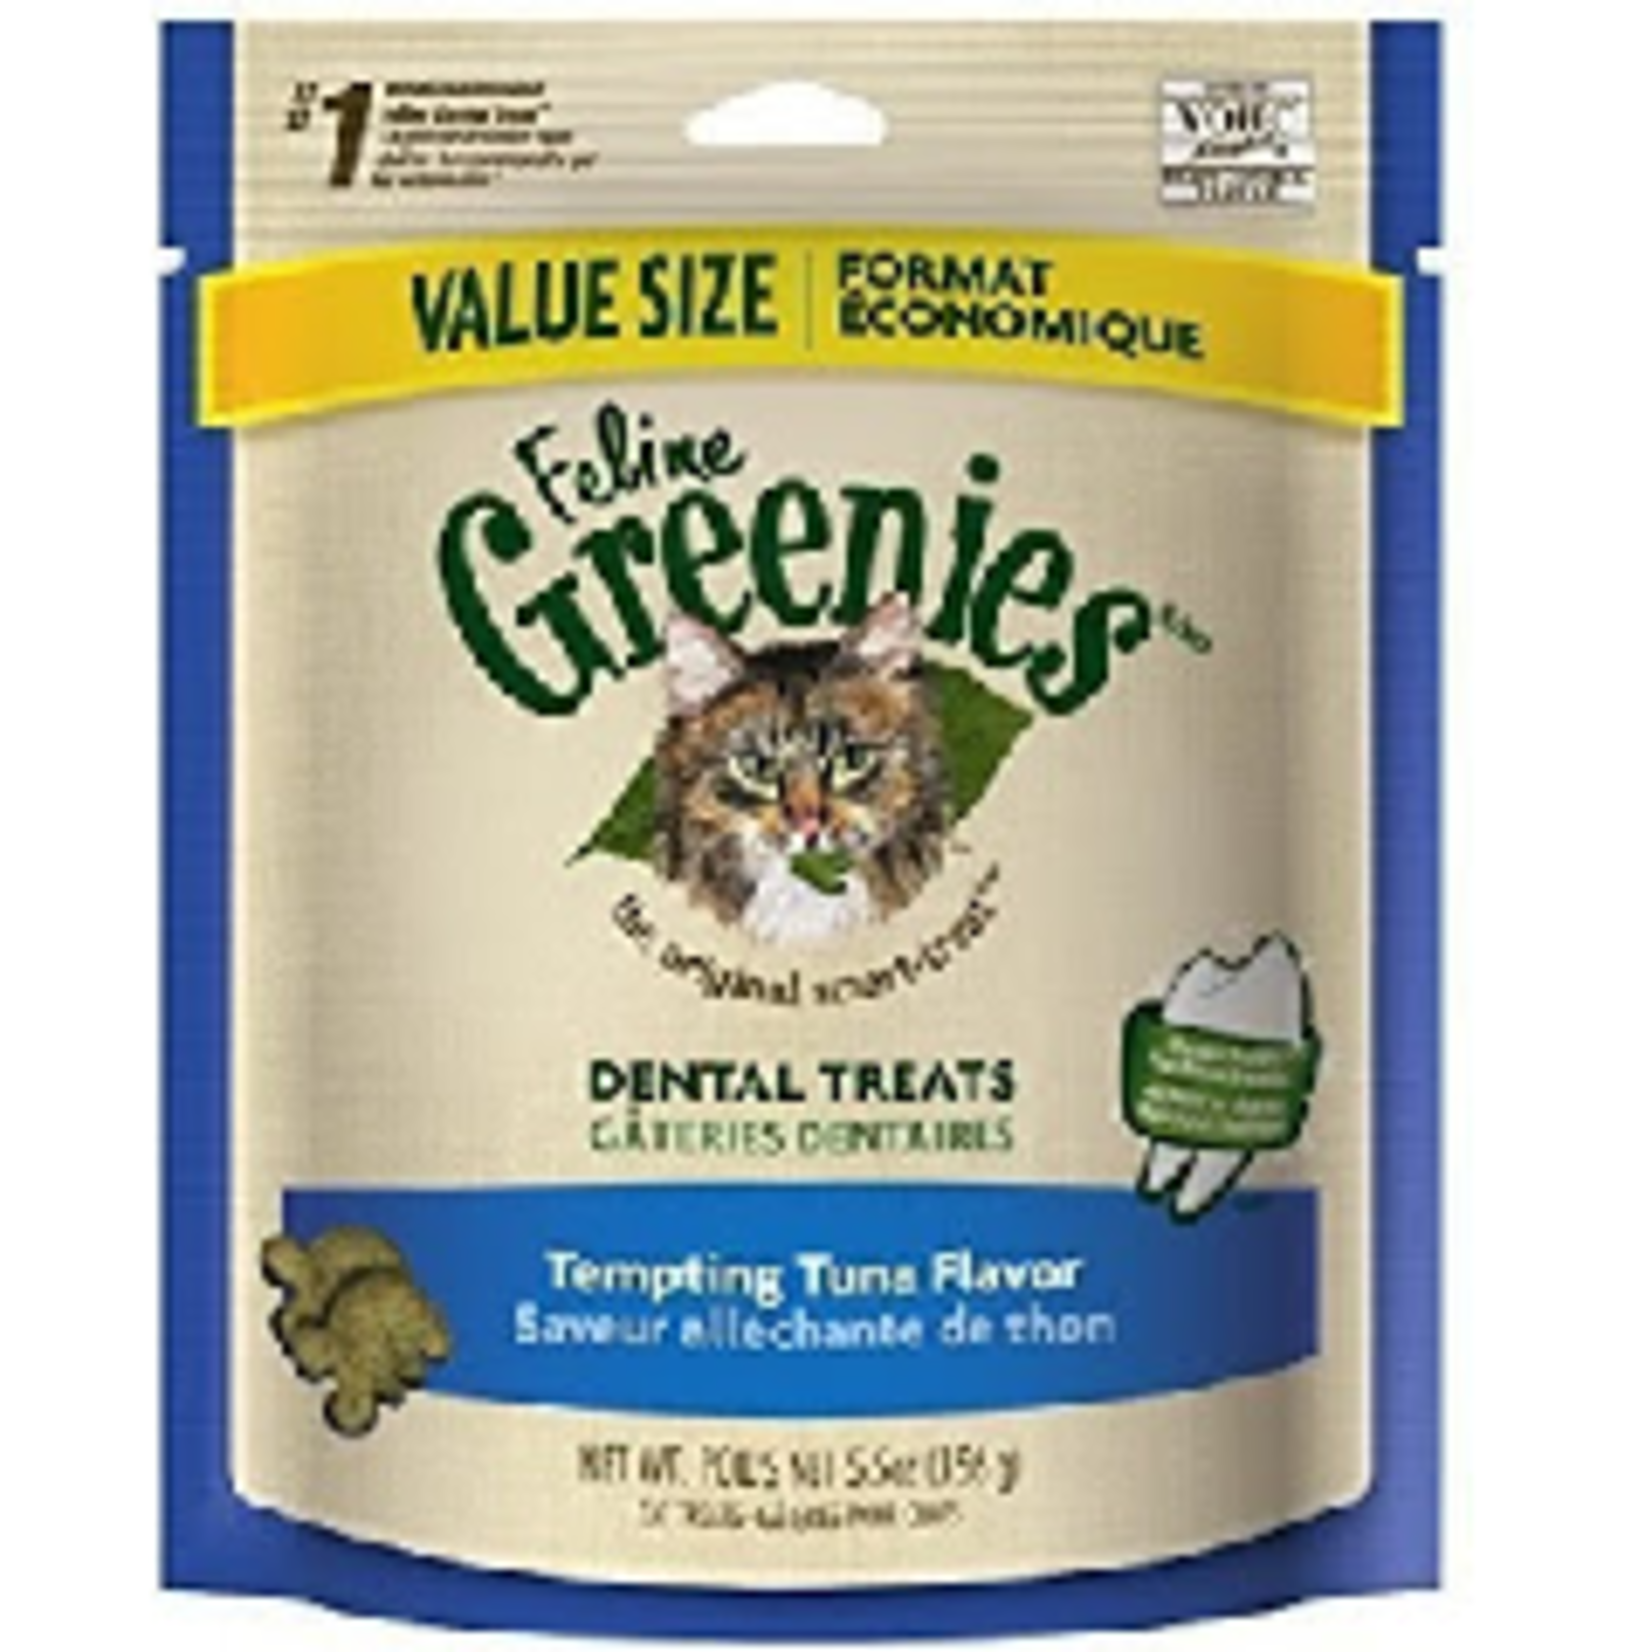 Greenies 4.6oz Tuna Feline Greenies